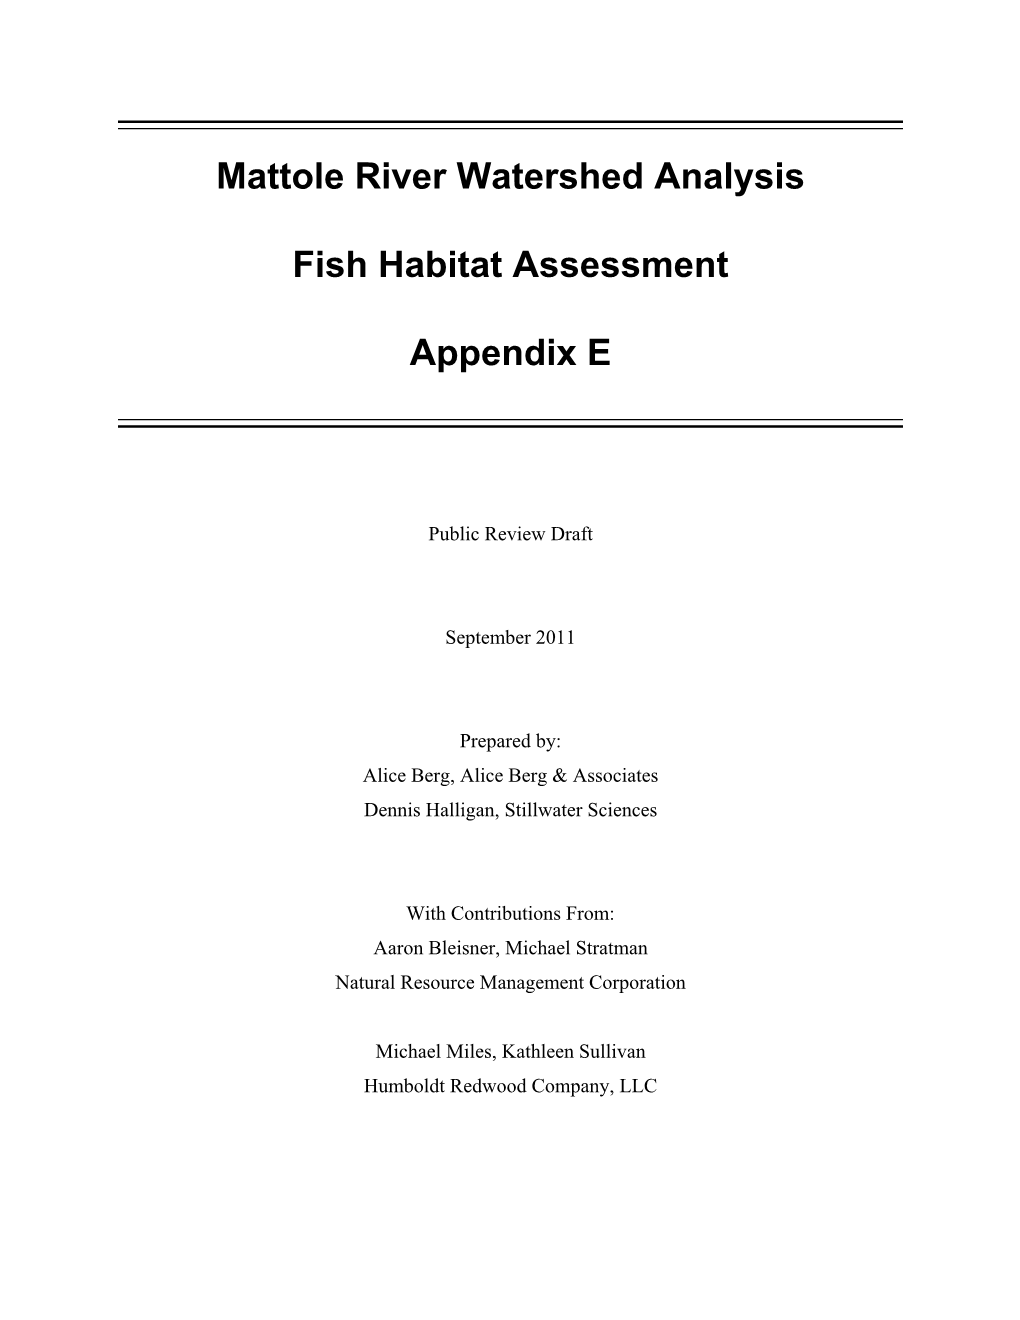 Mattole River Watershed Analysis Fish Habitat Assessment Appendix E